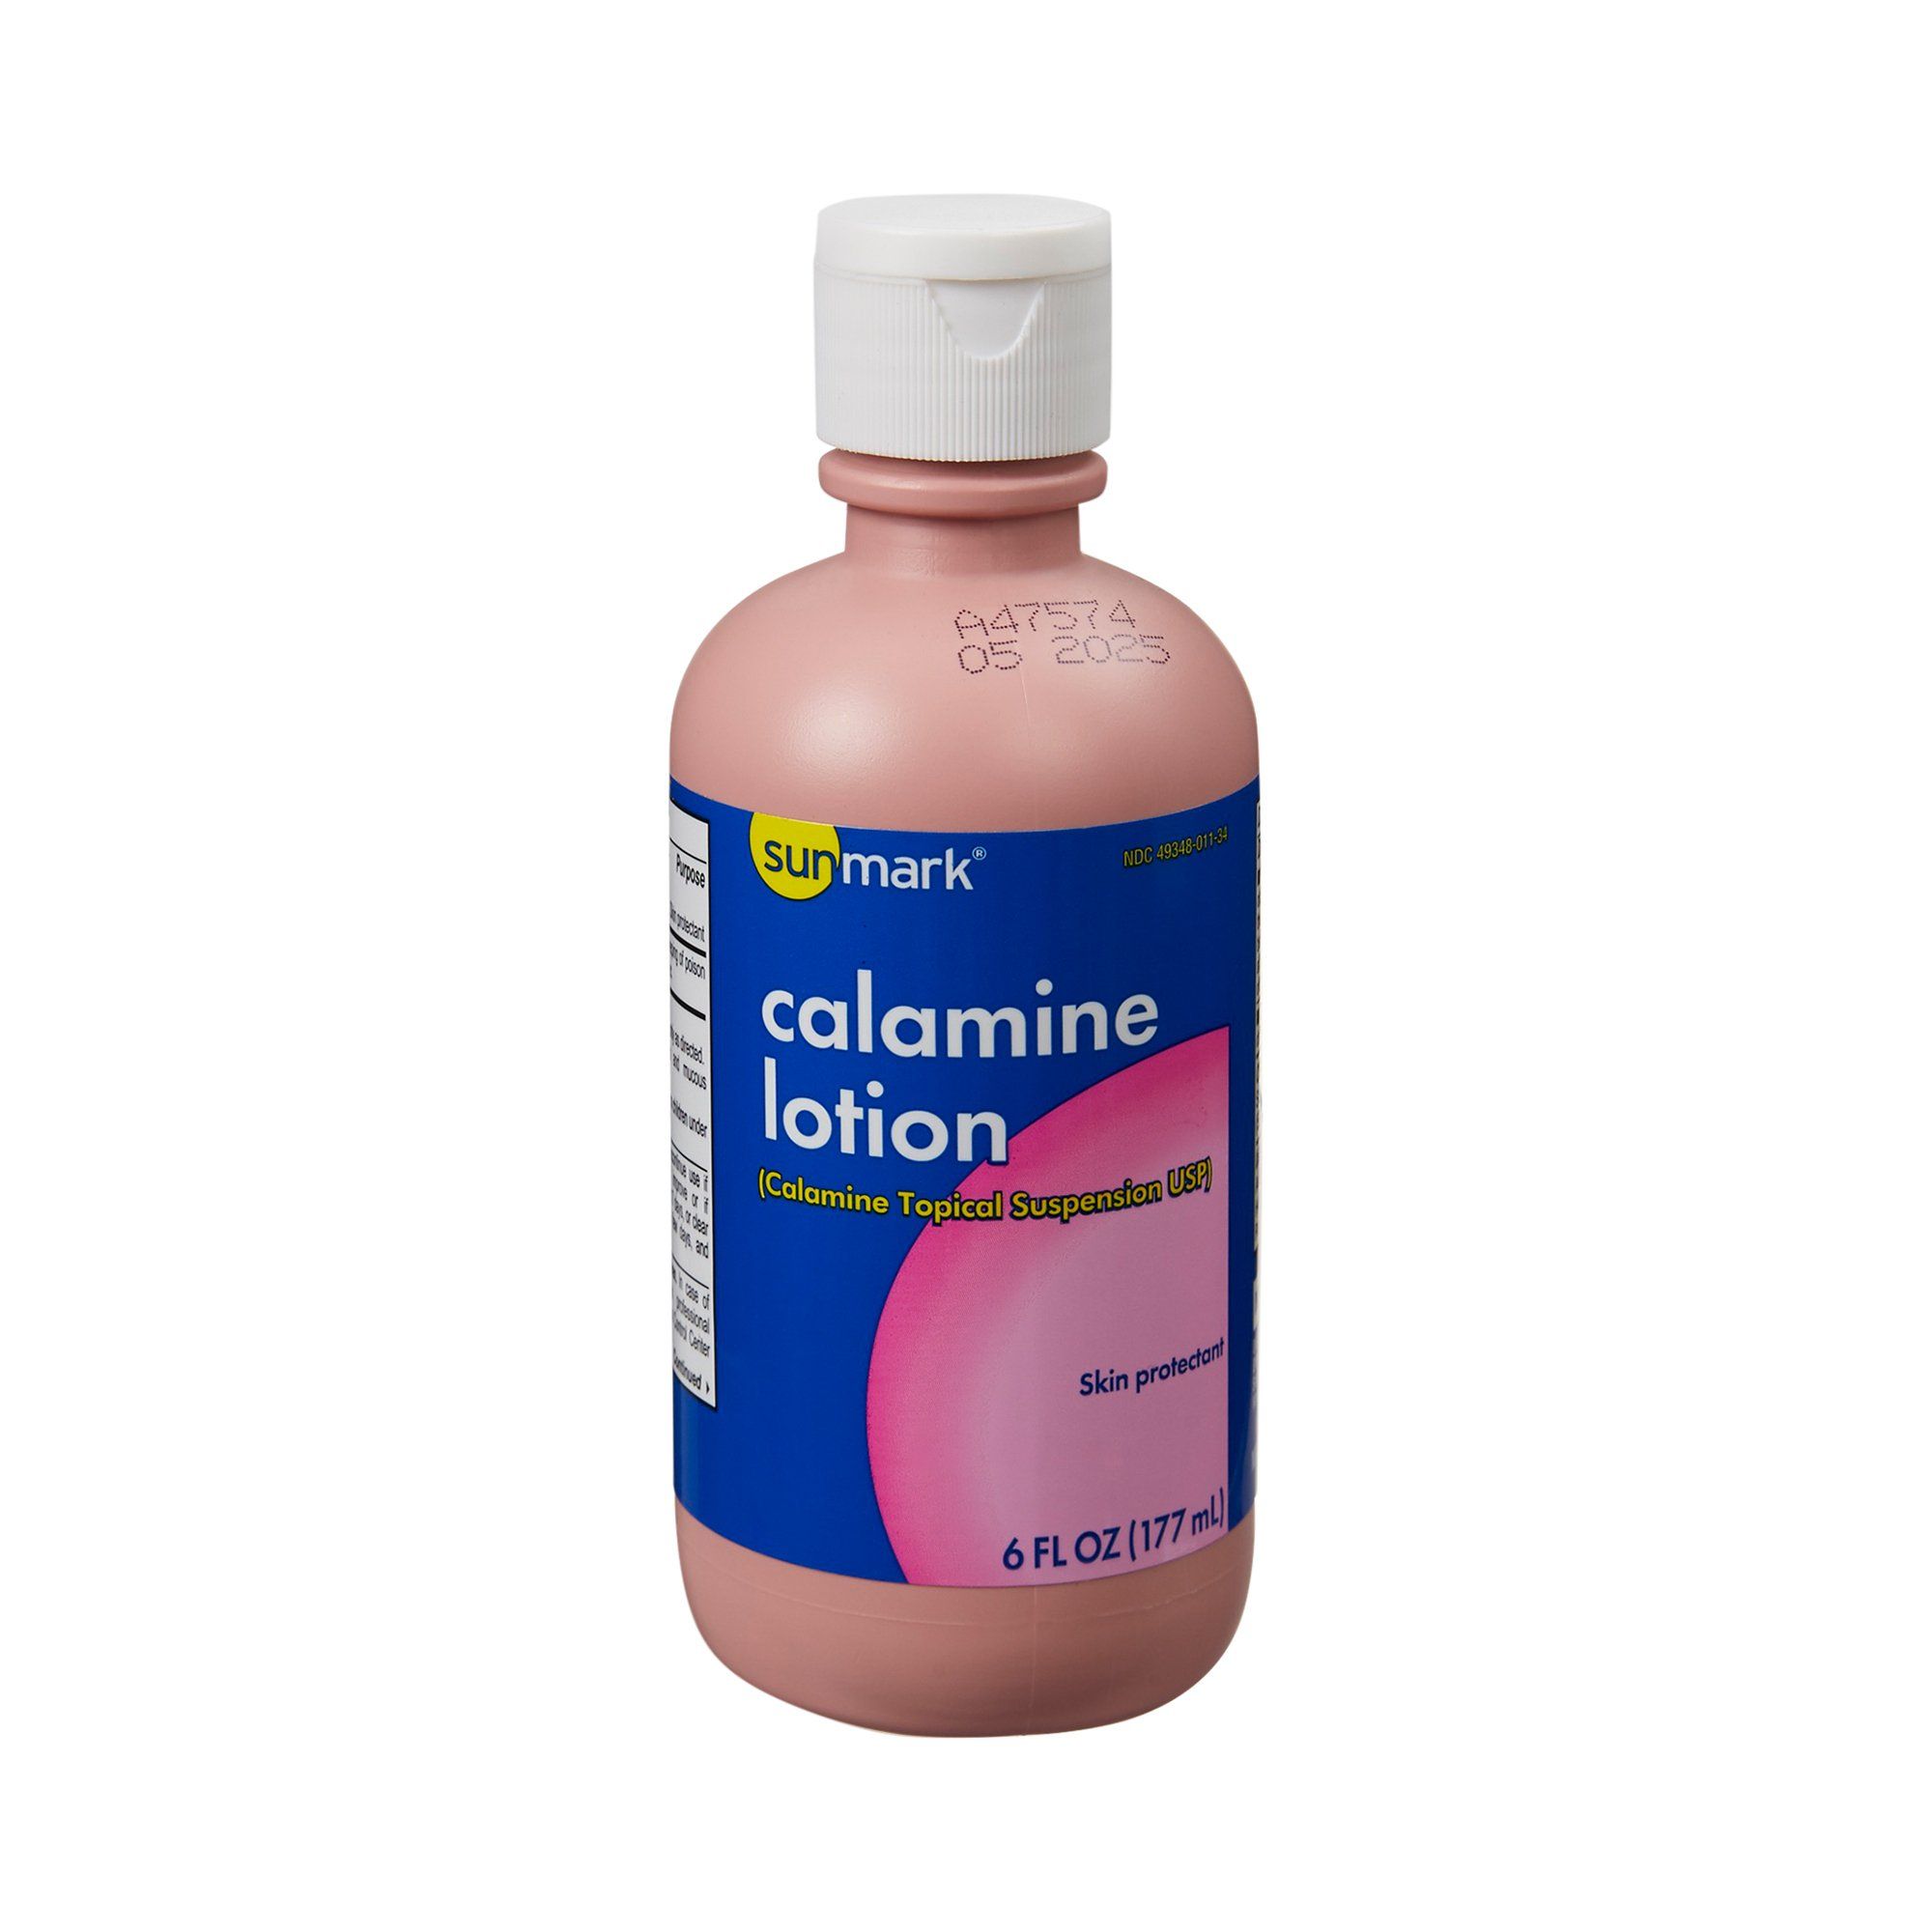 Sunmark Calamine Itch Relief Lotion - 6 fl oz